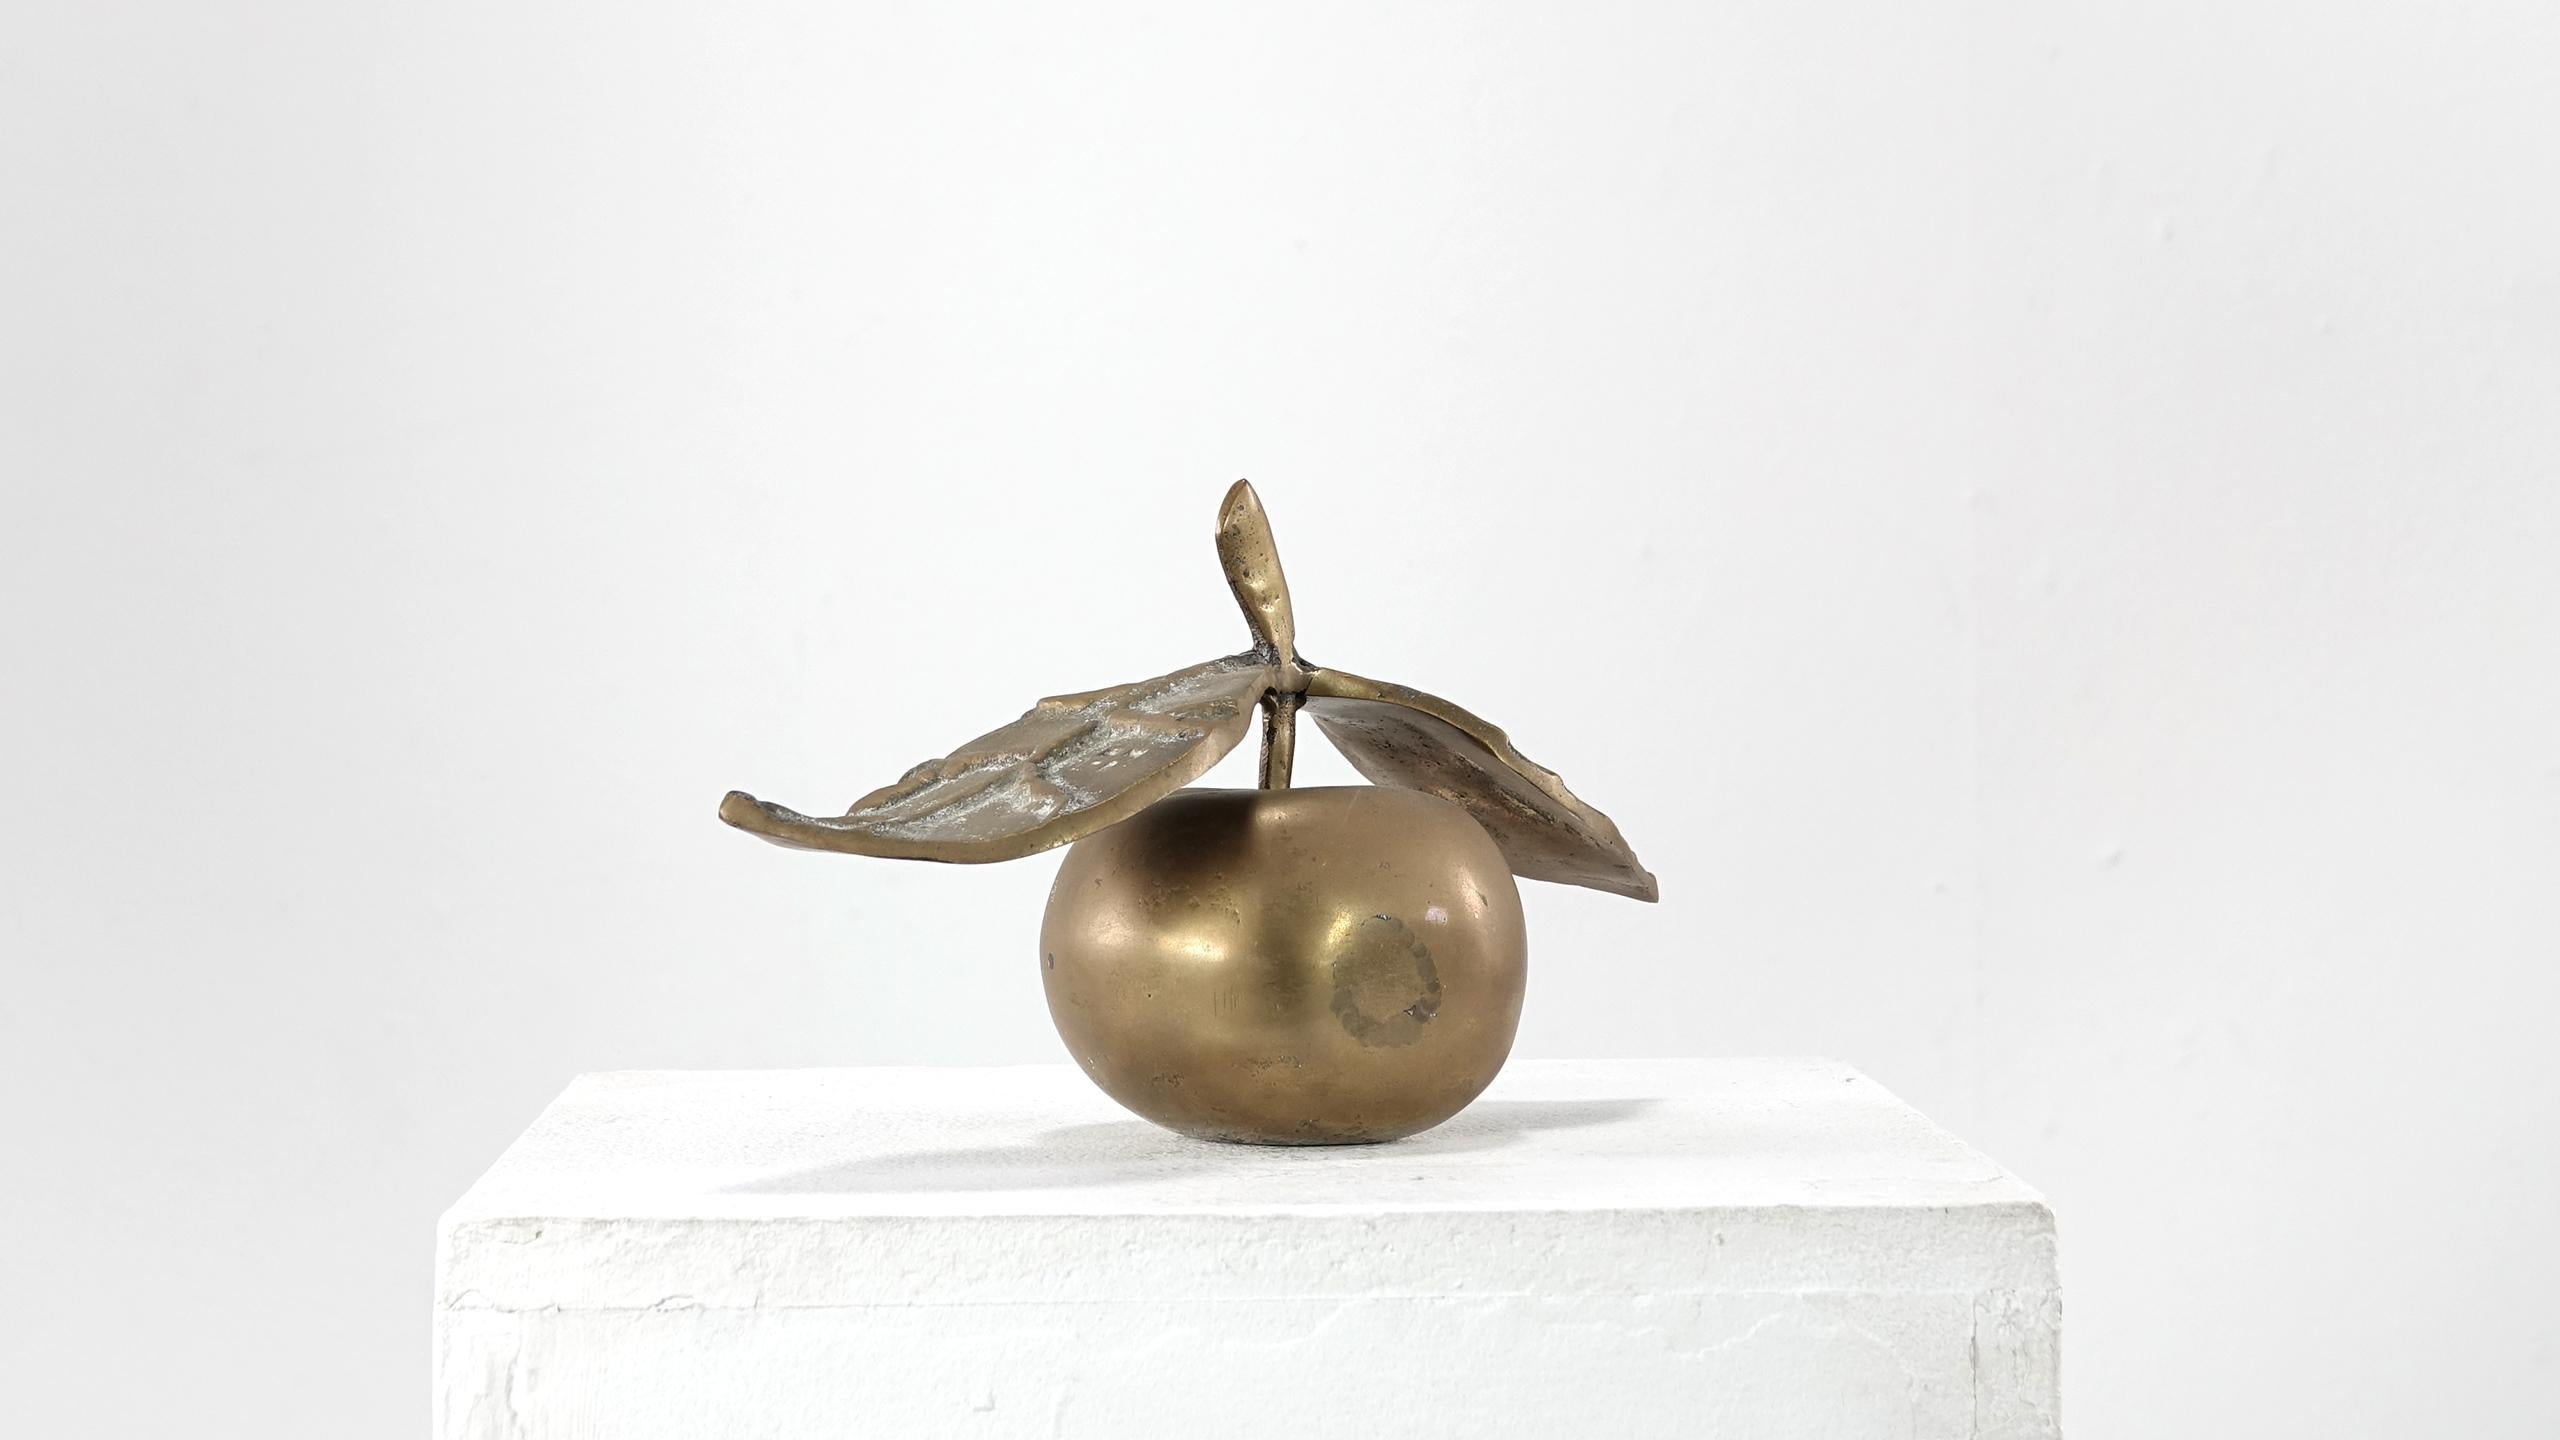 David Marshall Desenos Brass Apple Sculpture 5